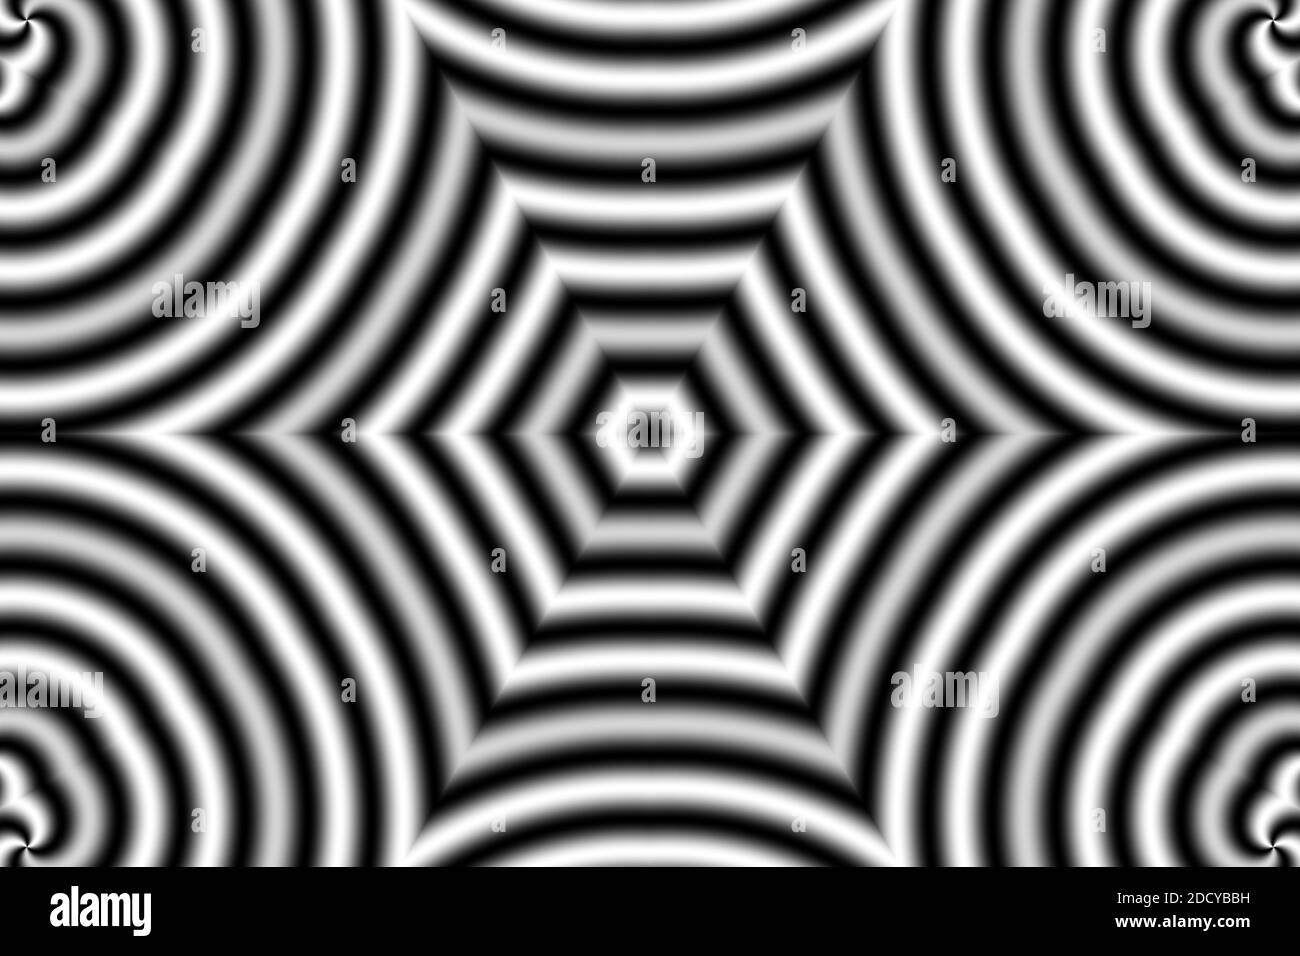 Black and white optical illusion Stock Photo